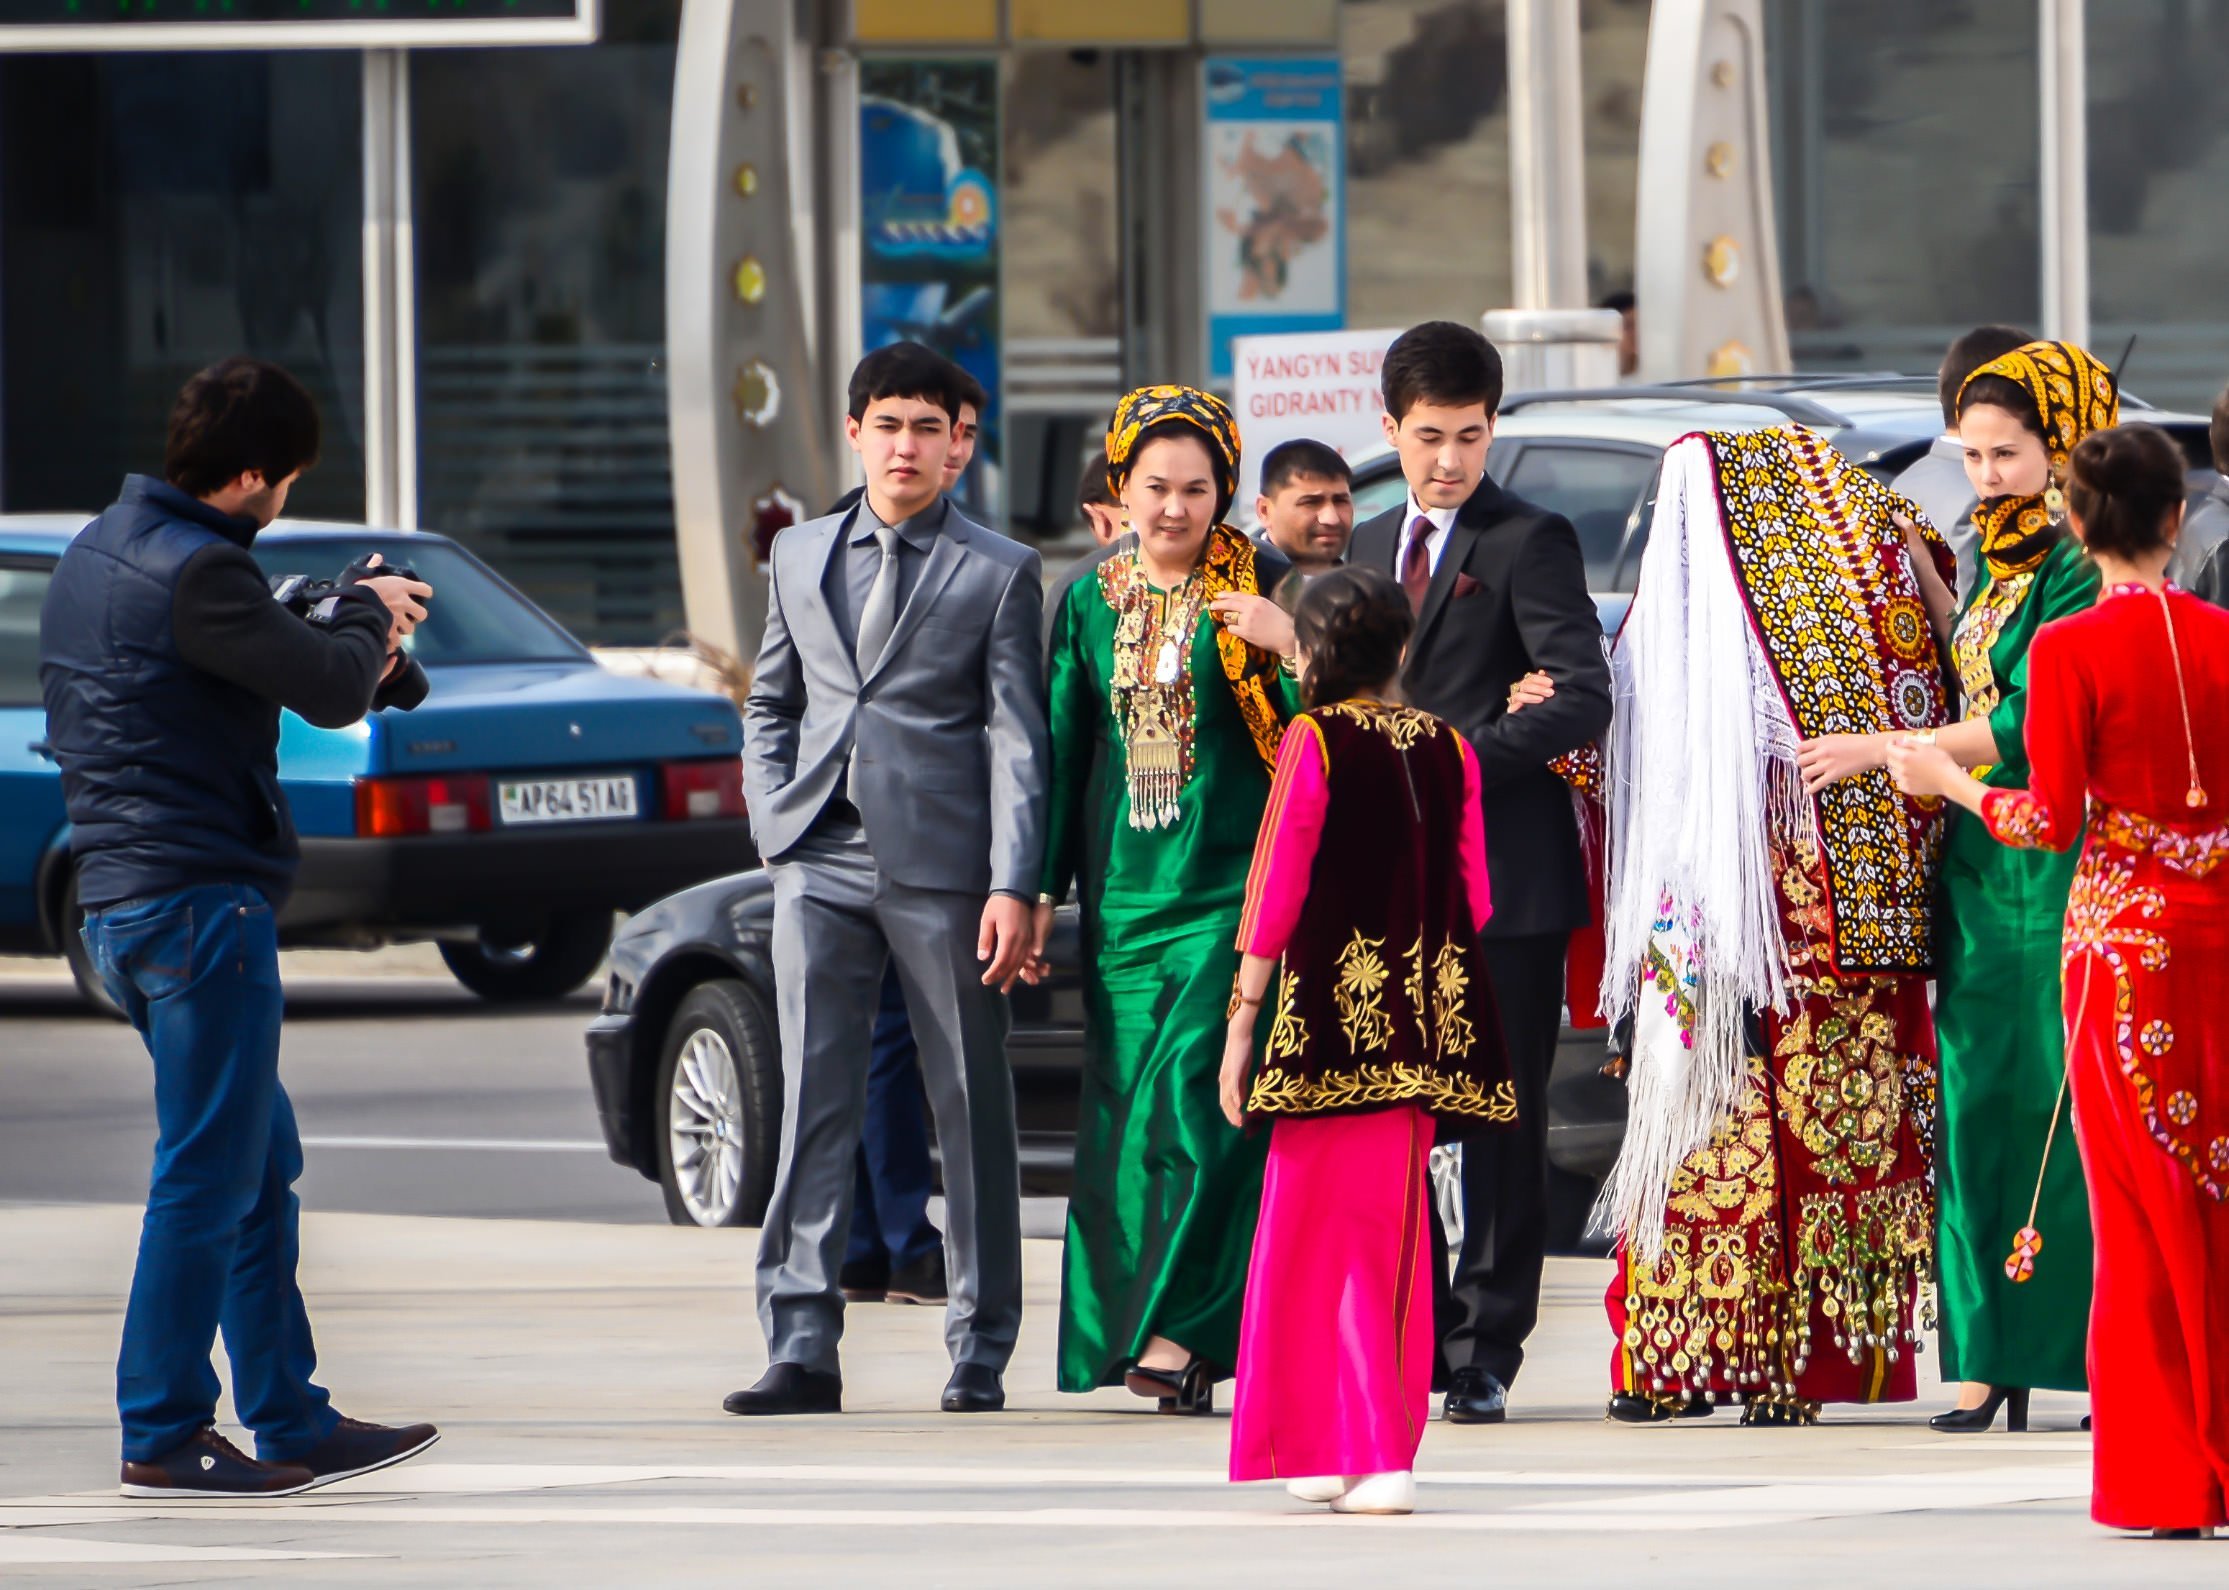 Таджикски б. Современная Туркмения туркменки. Свадьба Ашхабадская туркменский. Туркменистан Toy yegenler. Дворец бракосочетания, Туркменабад, Туркменистан.